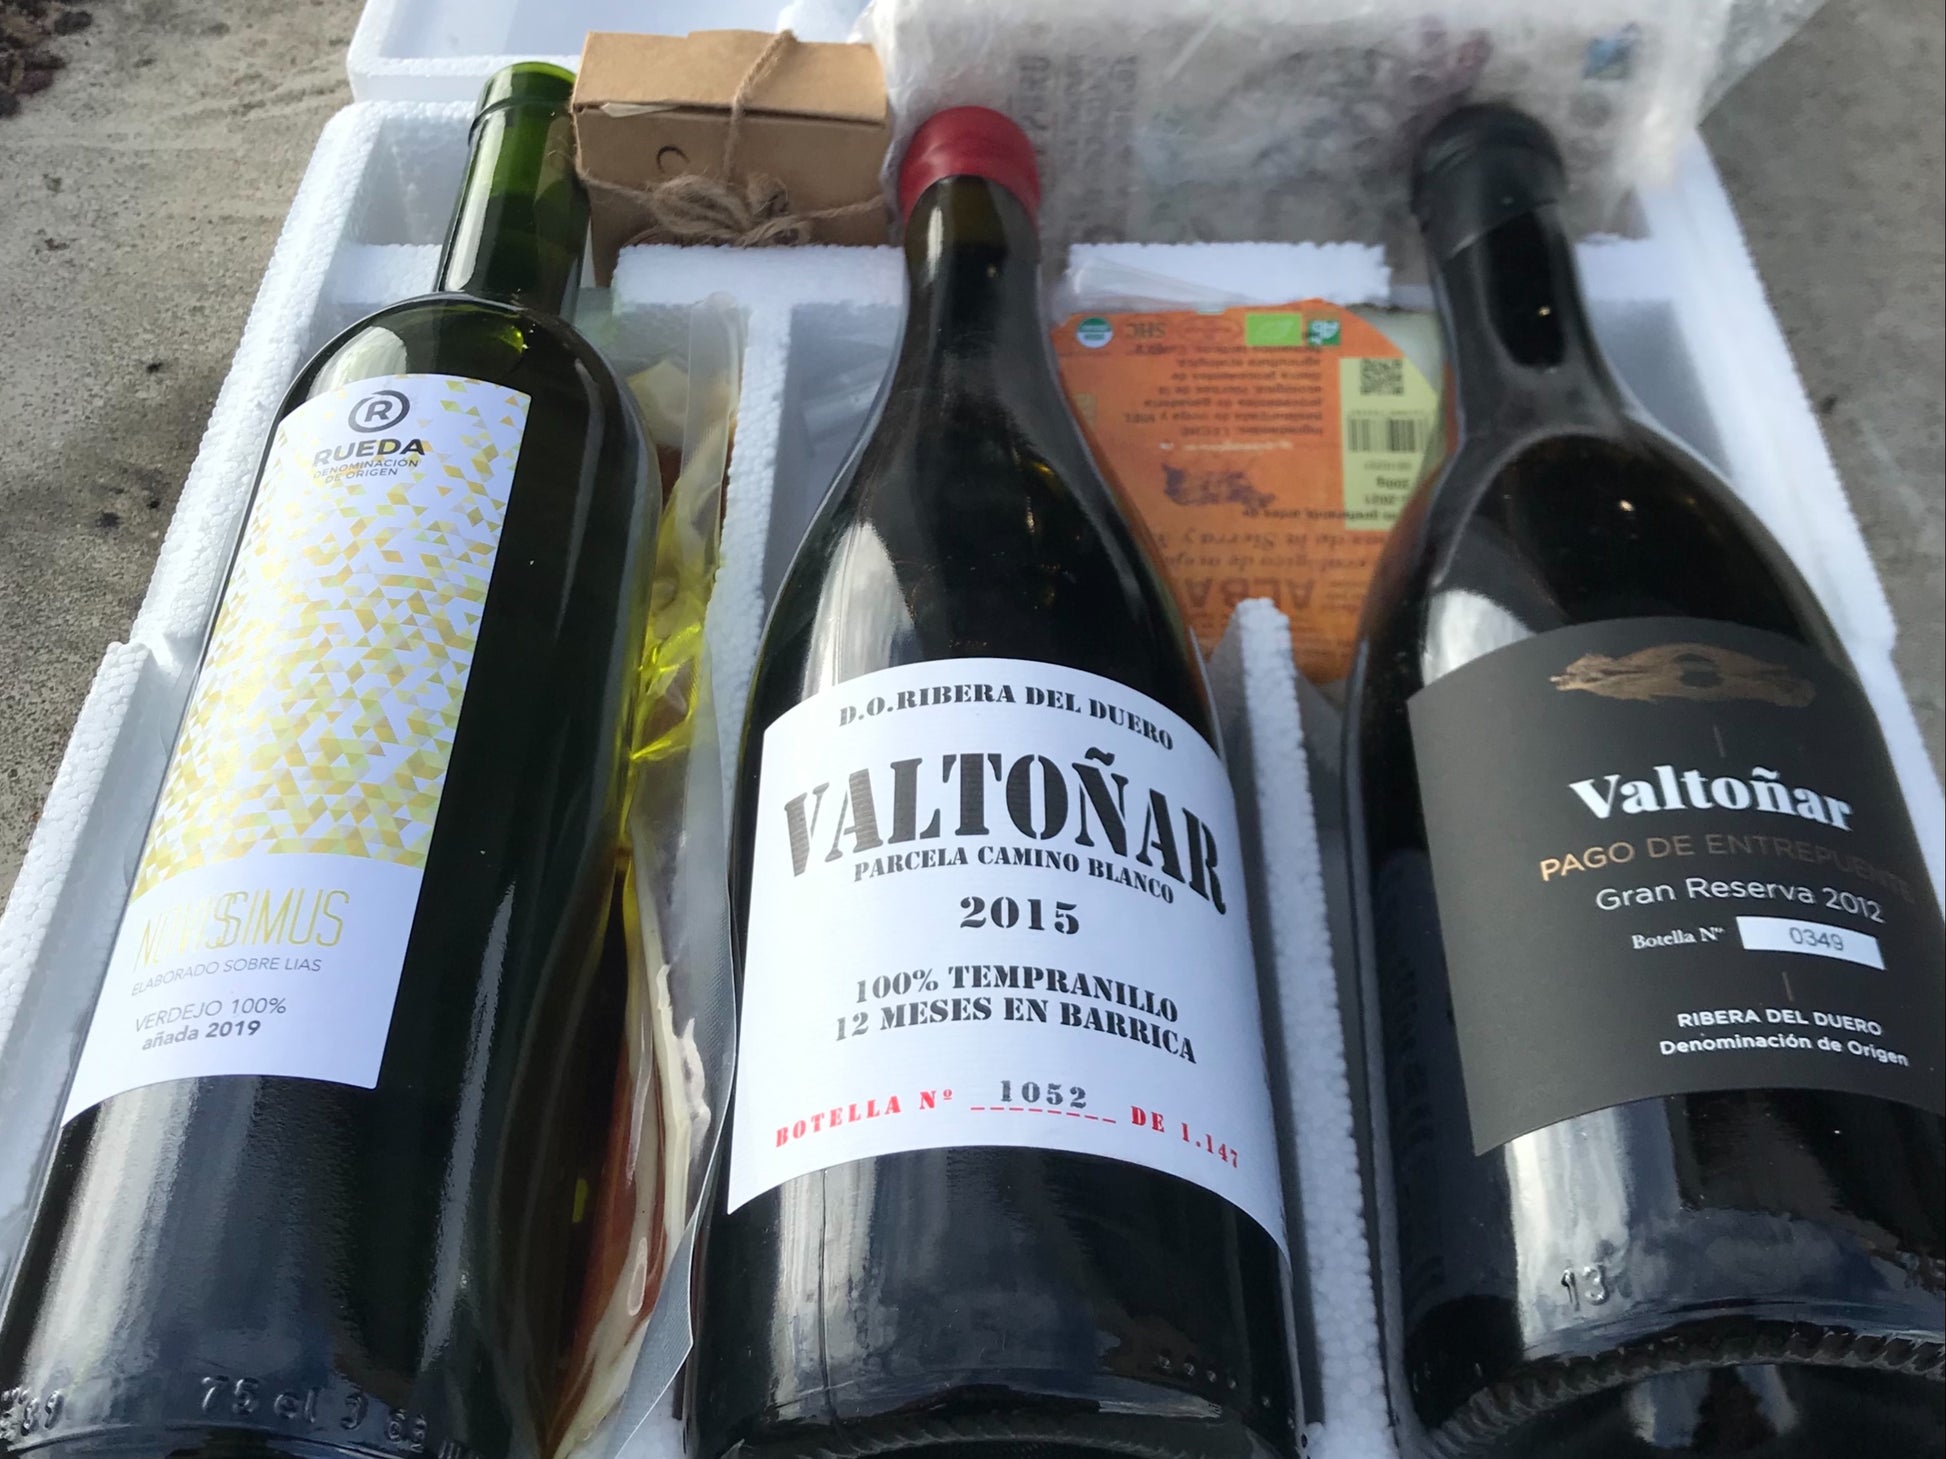 Spanish Wine Tasting Experience (full bottles) by Valtoñar